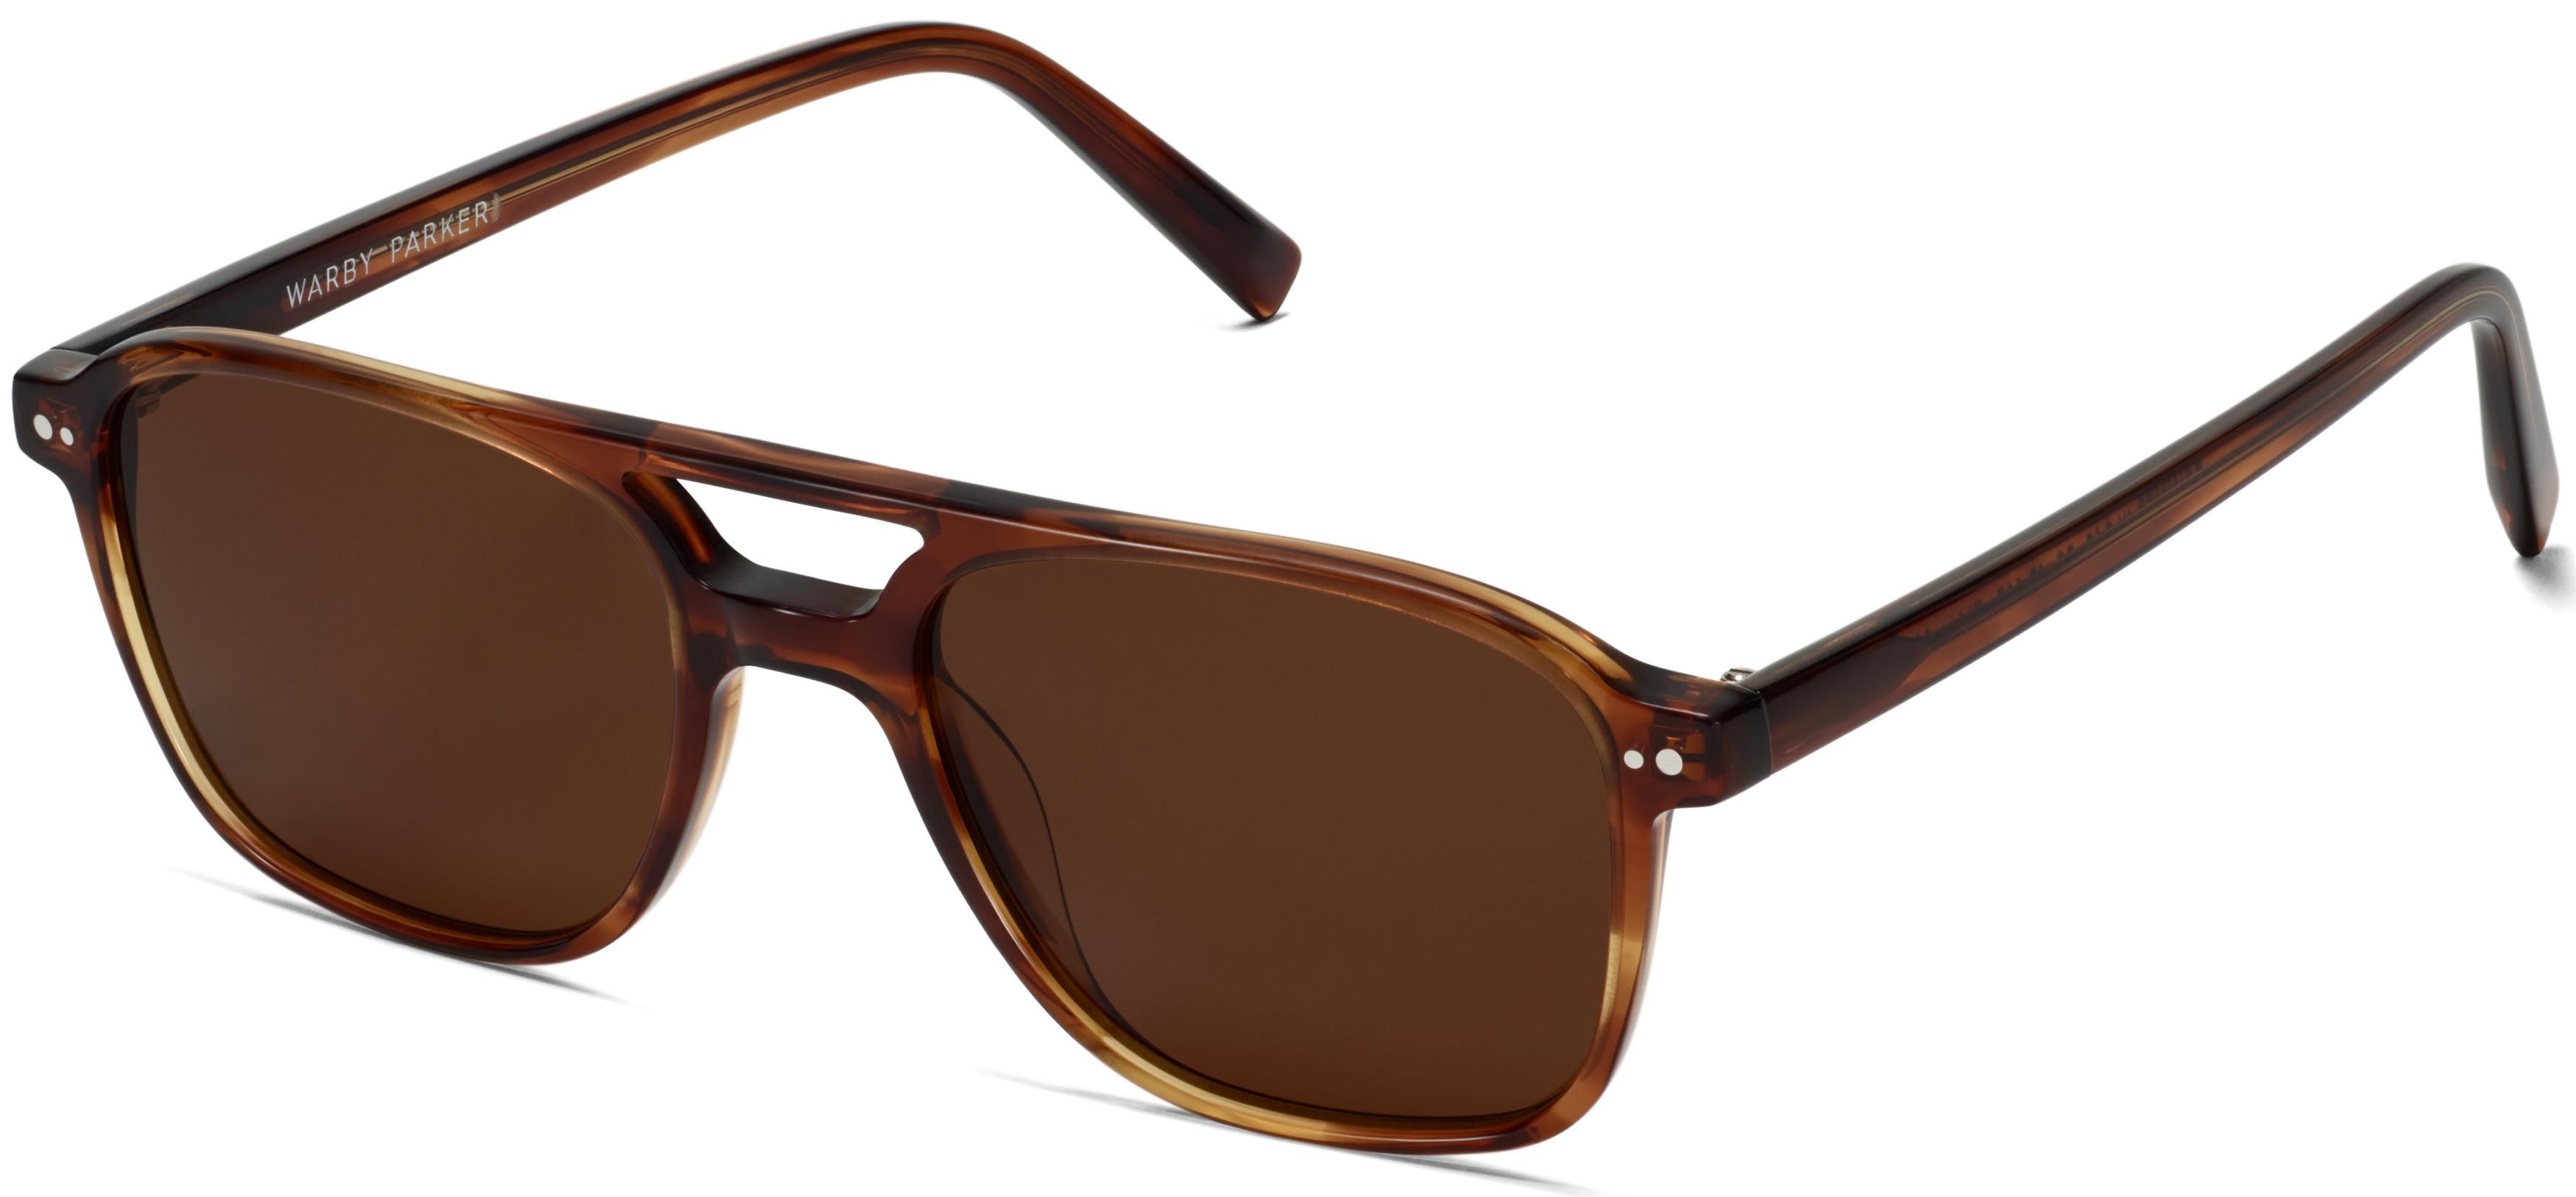 Brimmer Sunglasses in Black Walnut | Warby Parker | Warby Parker (US)